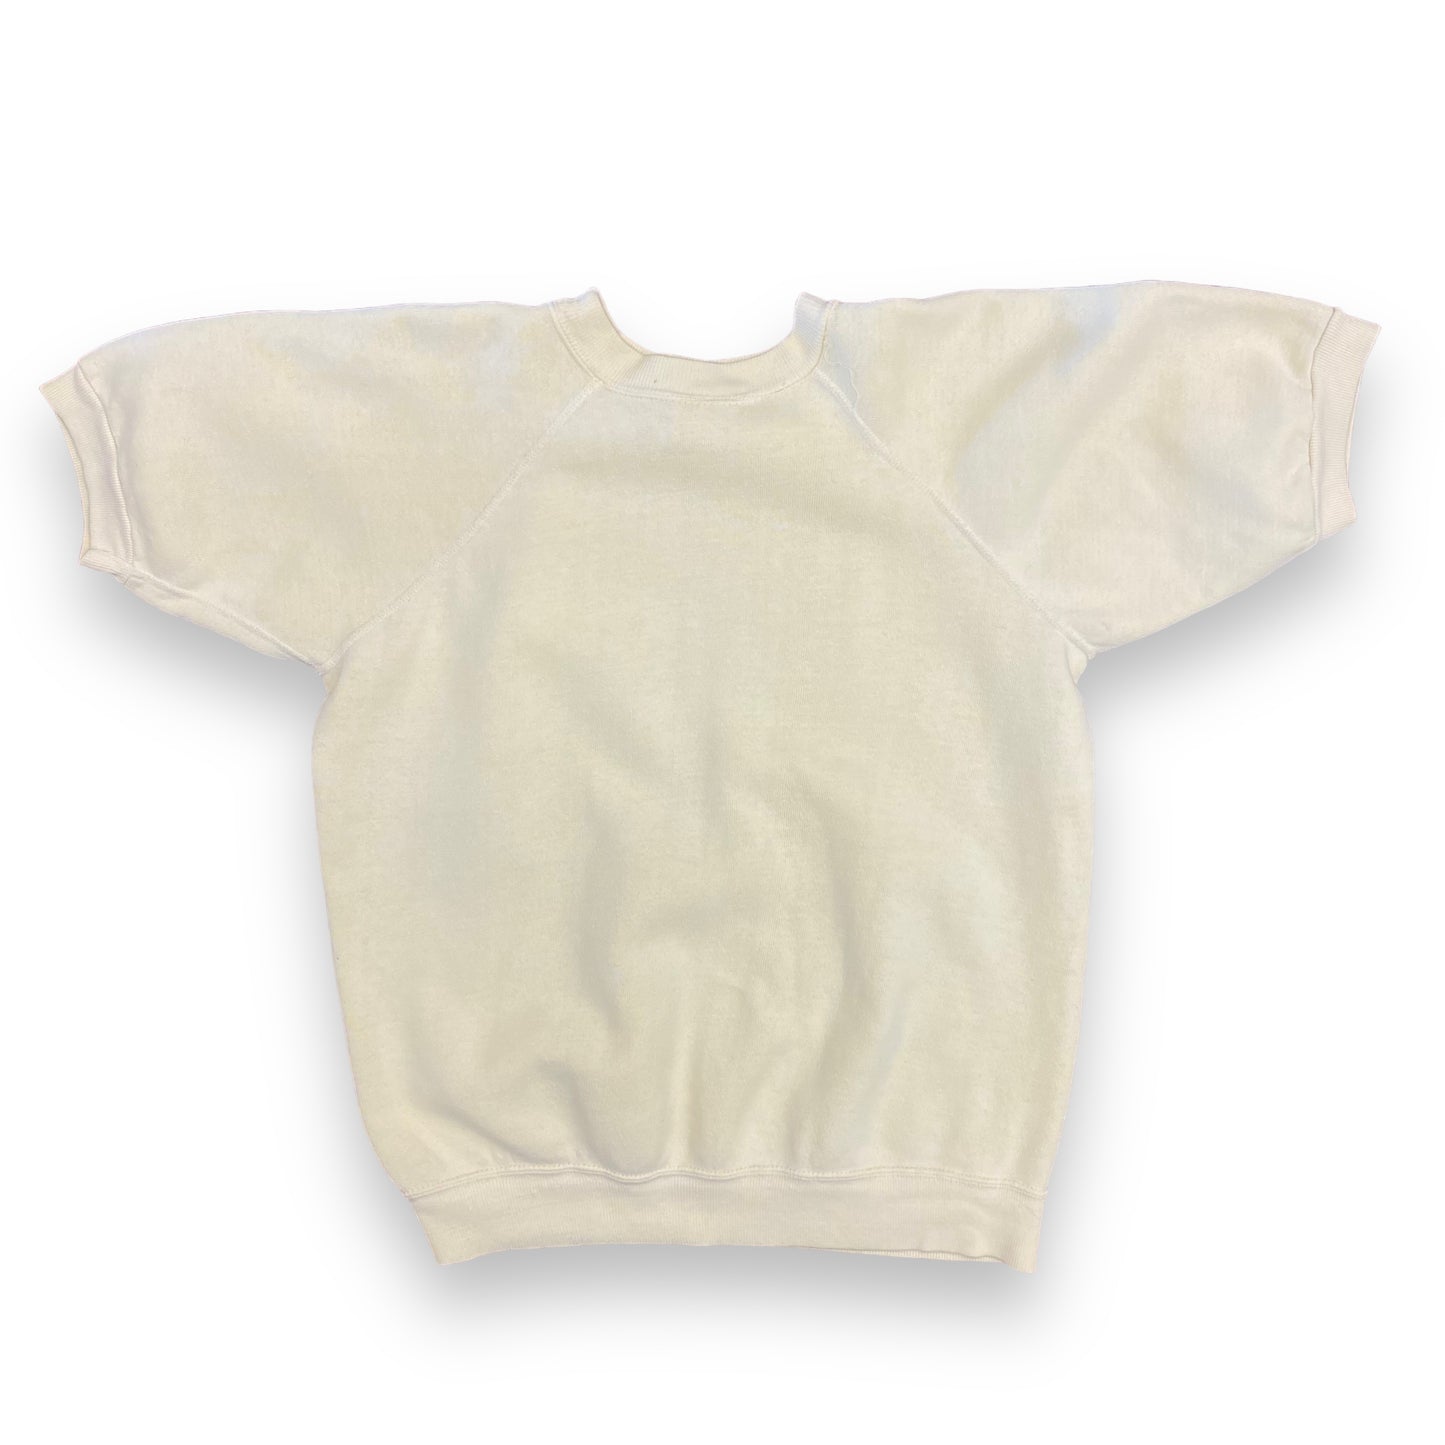 1960s/1970s Anderson-Little Light Yellow Short Sleeve Sweatshirt - Size Medium